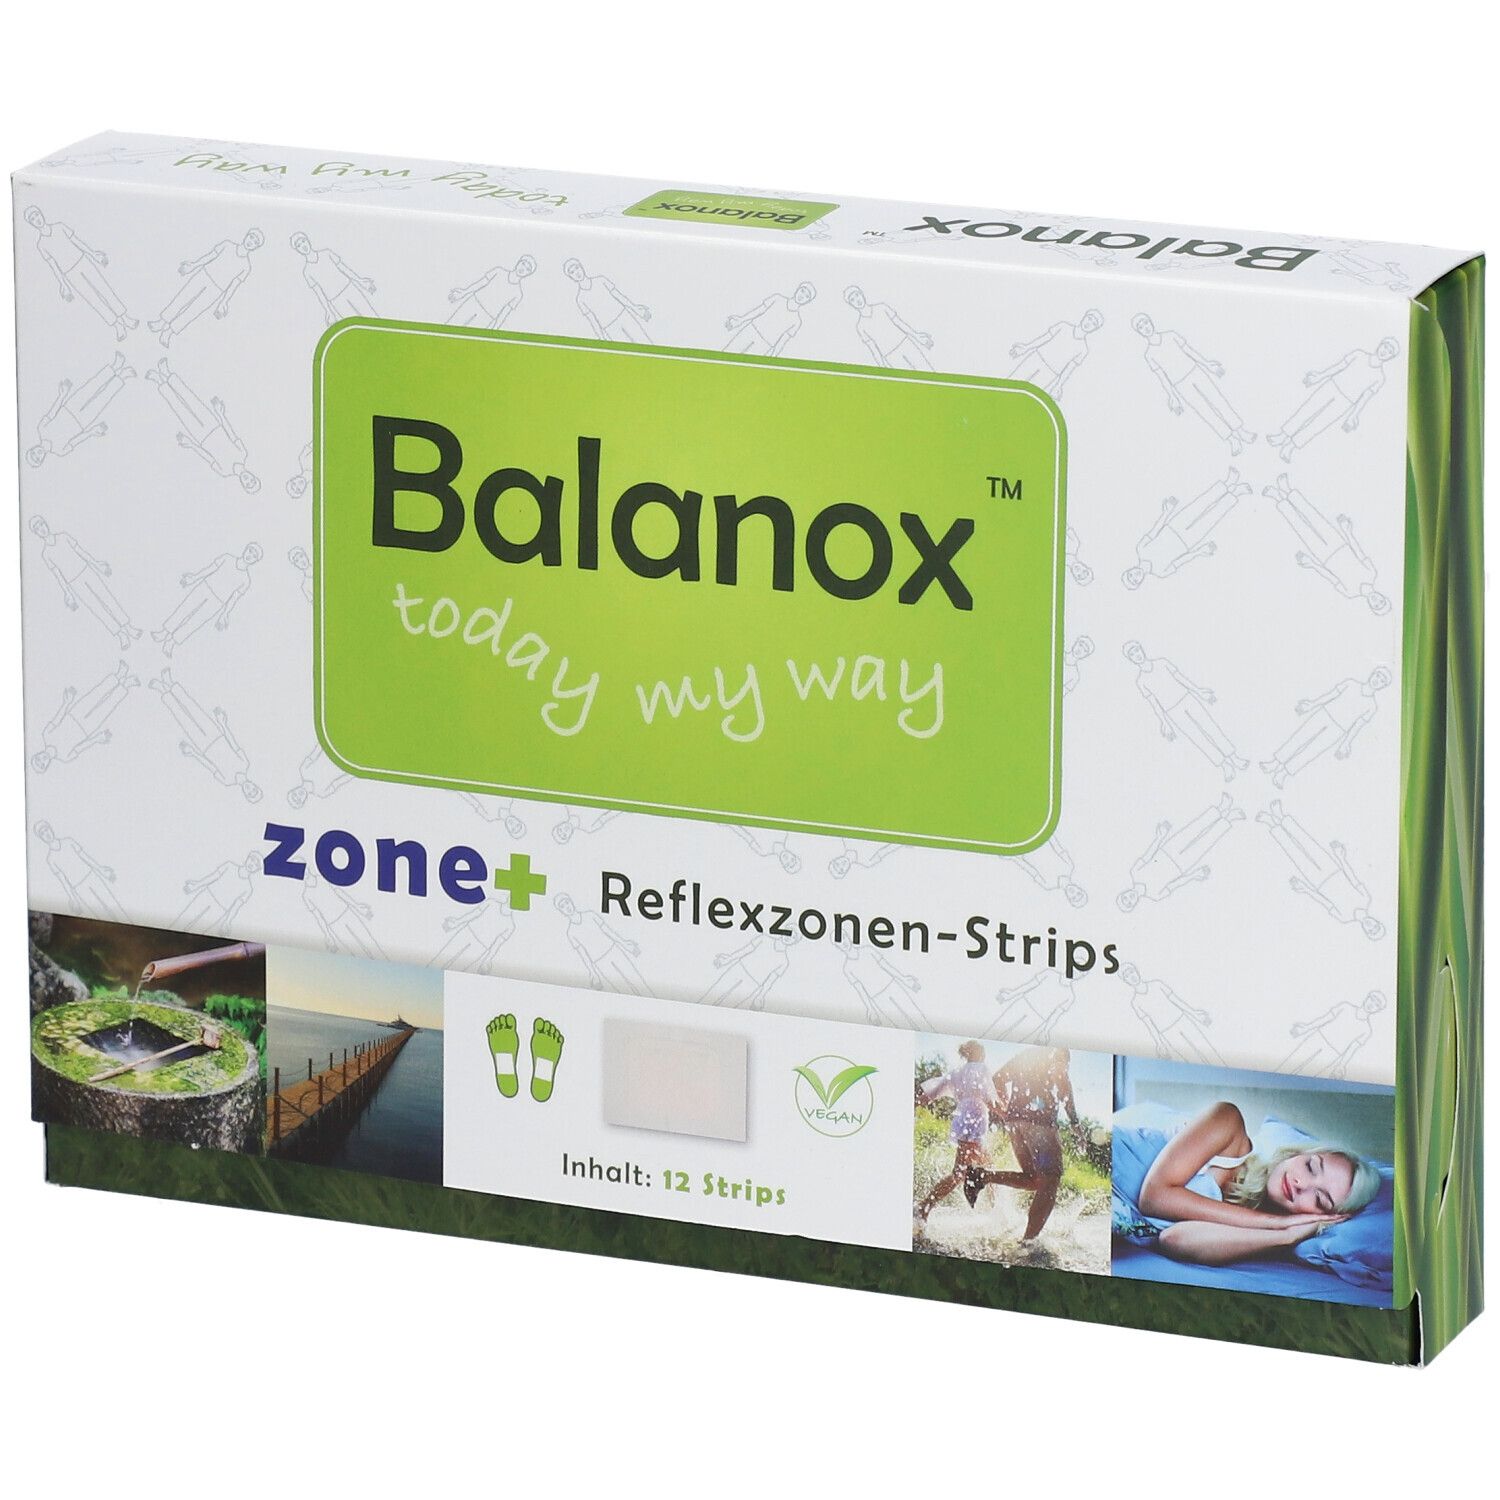 Balanox™ zone+ Reflexzonen-Strips